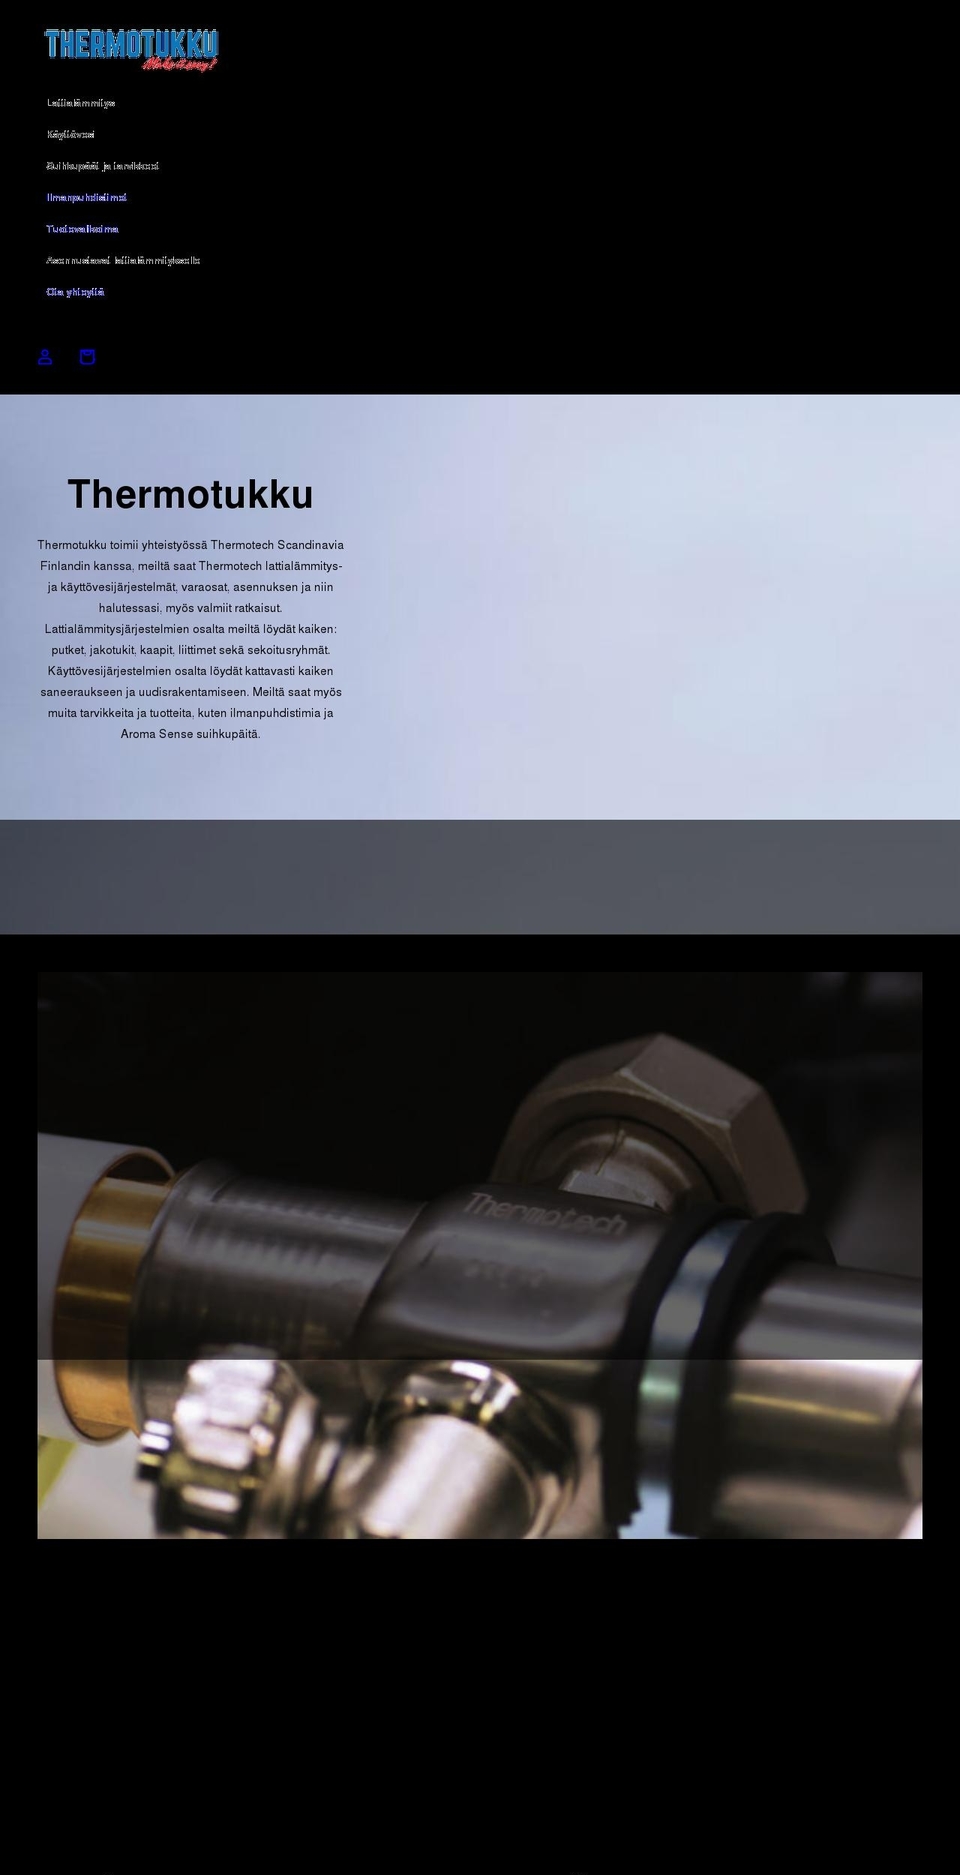 thermotukku.fi shopify website screenshot